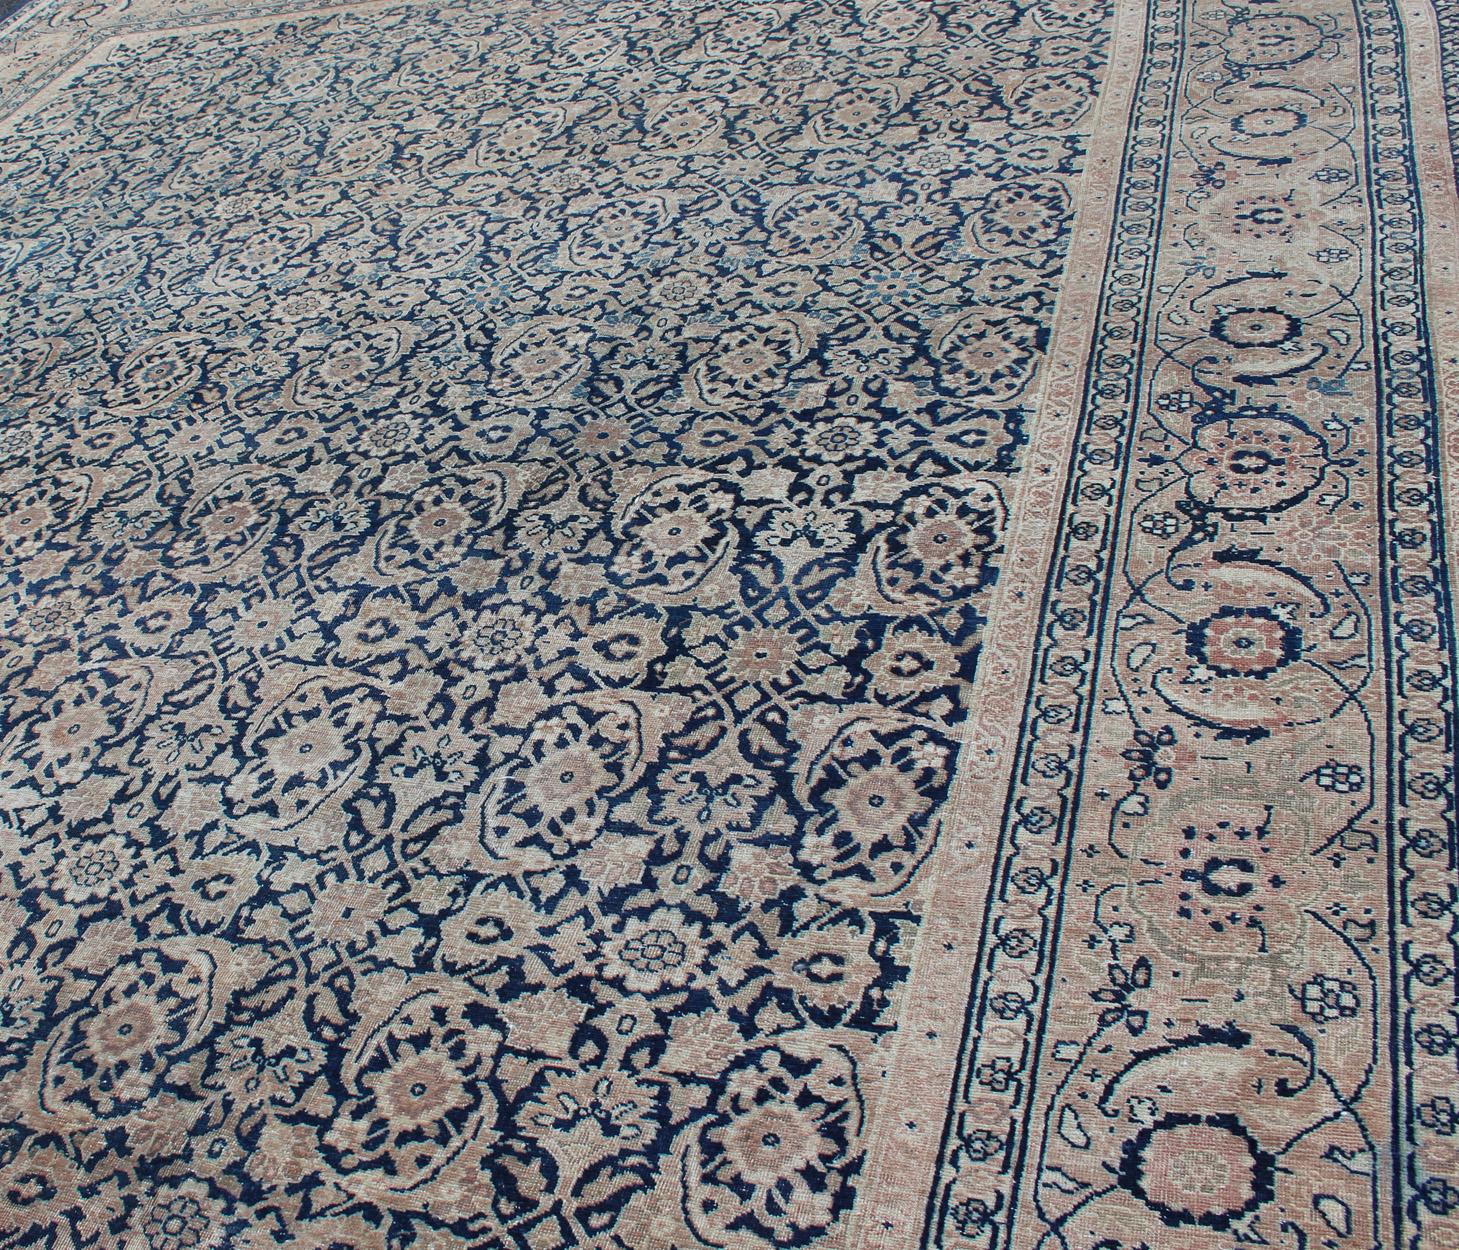 Antique Persian Tabriz Carpet with Geometric Herati Design in Dark Blue Tones For Sale 6